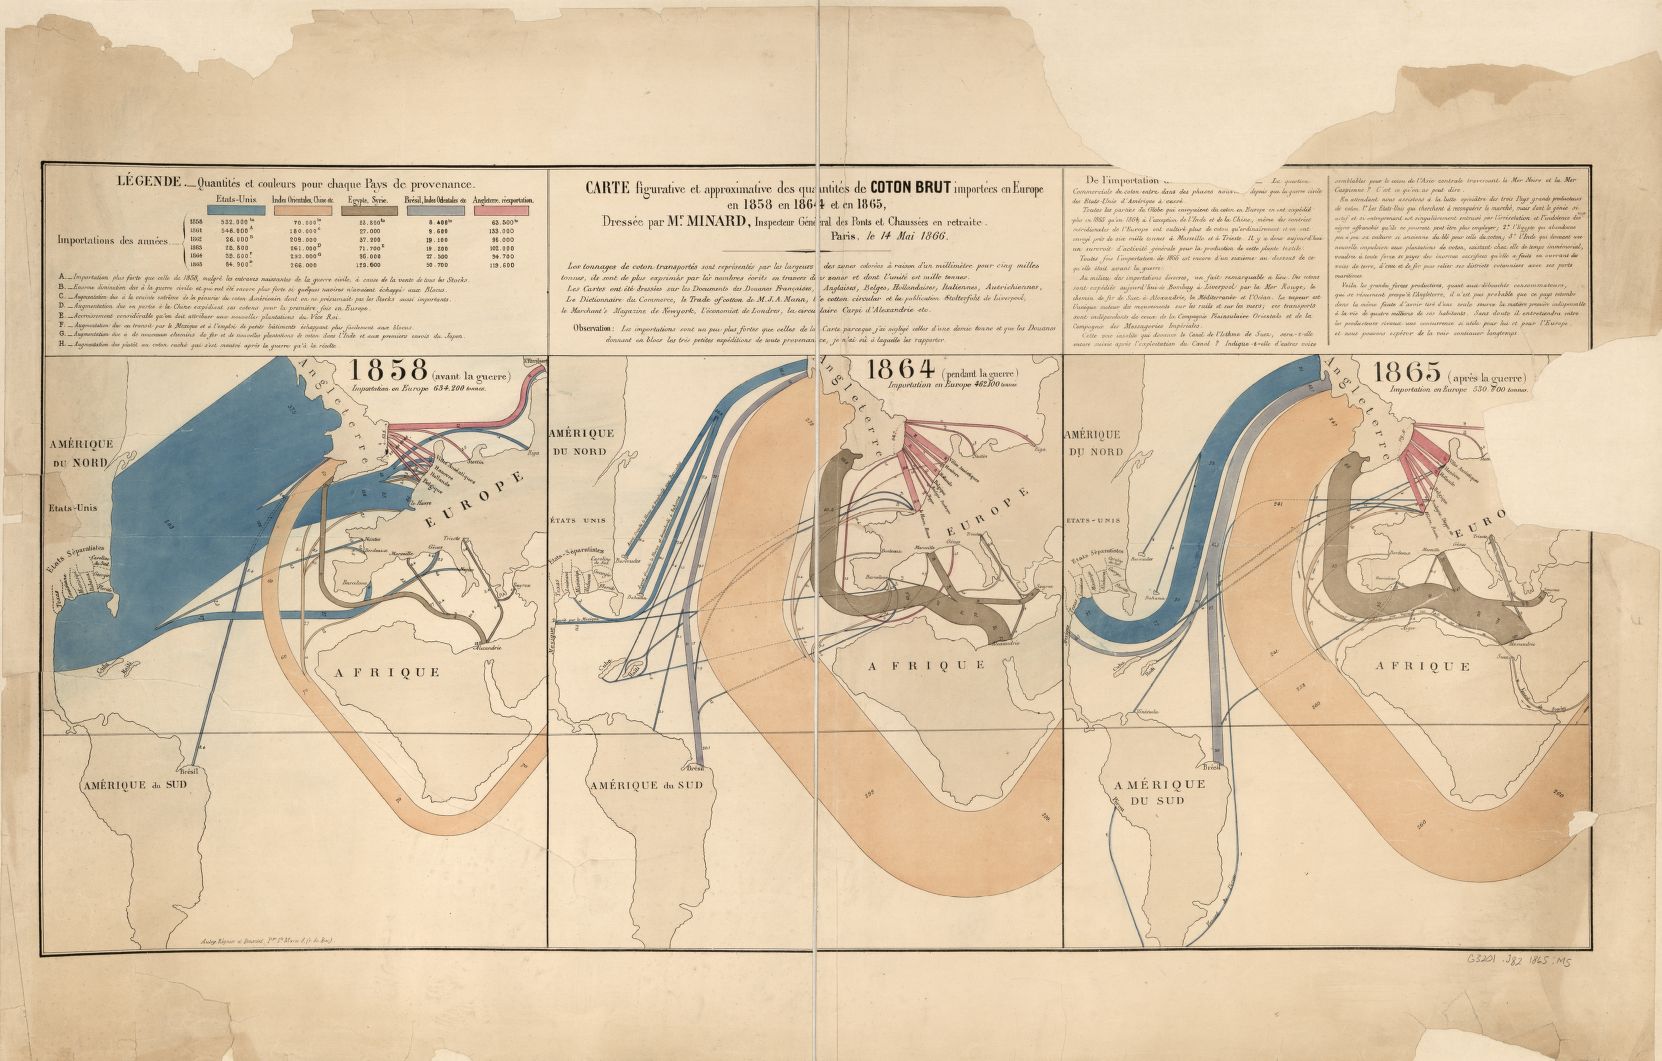 Global cotton flows 1858-1865